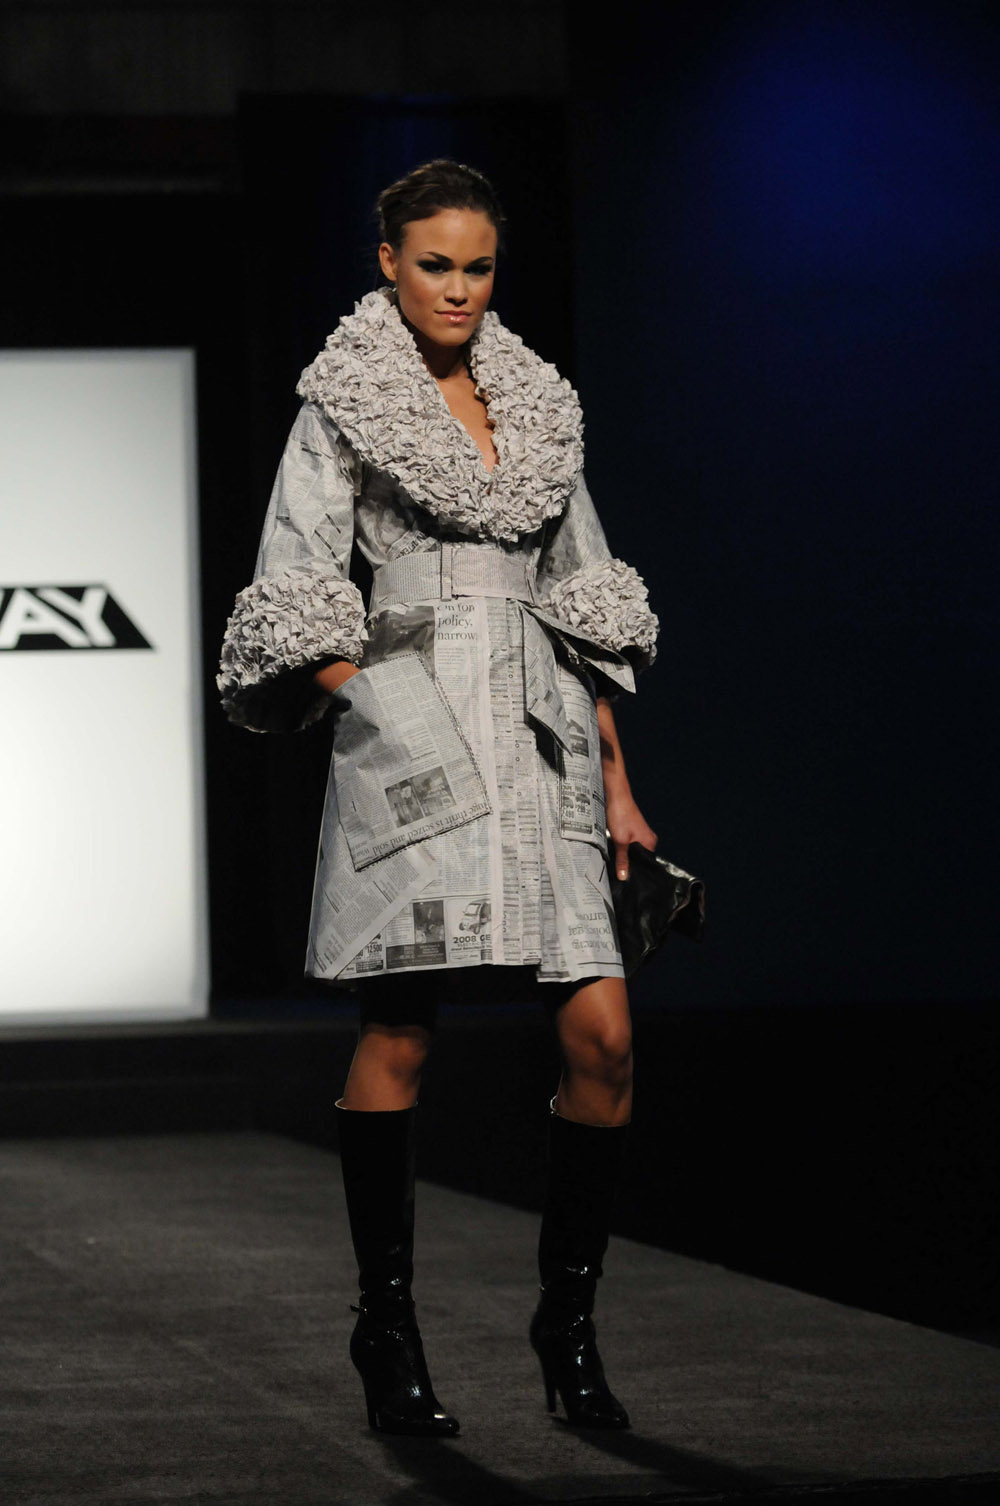 Project Runway Winner Irina Shabayeva Solo Debut at New York Fashion Week